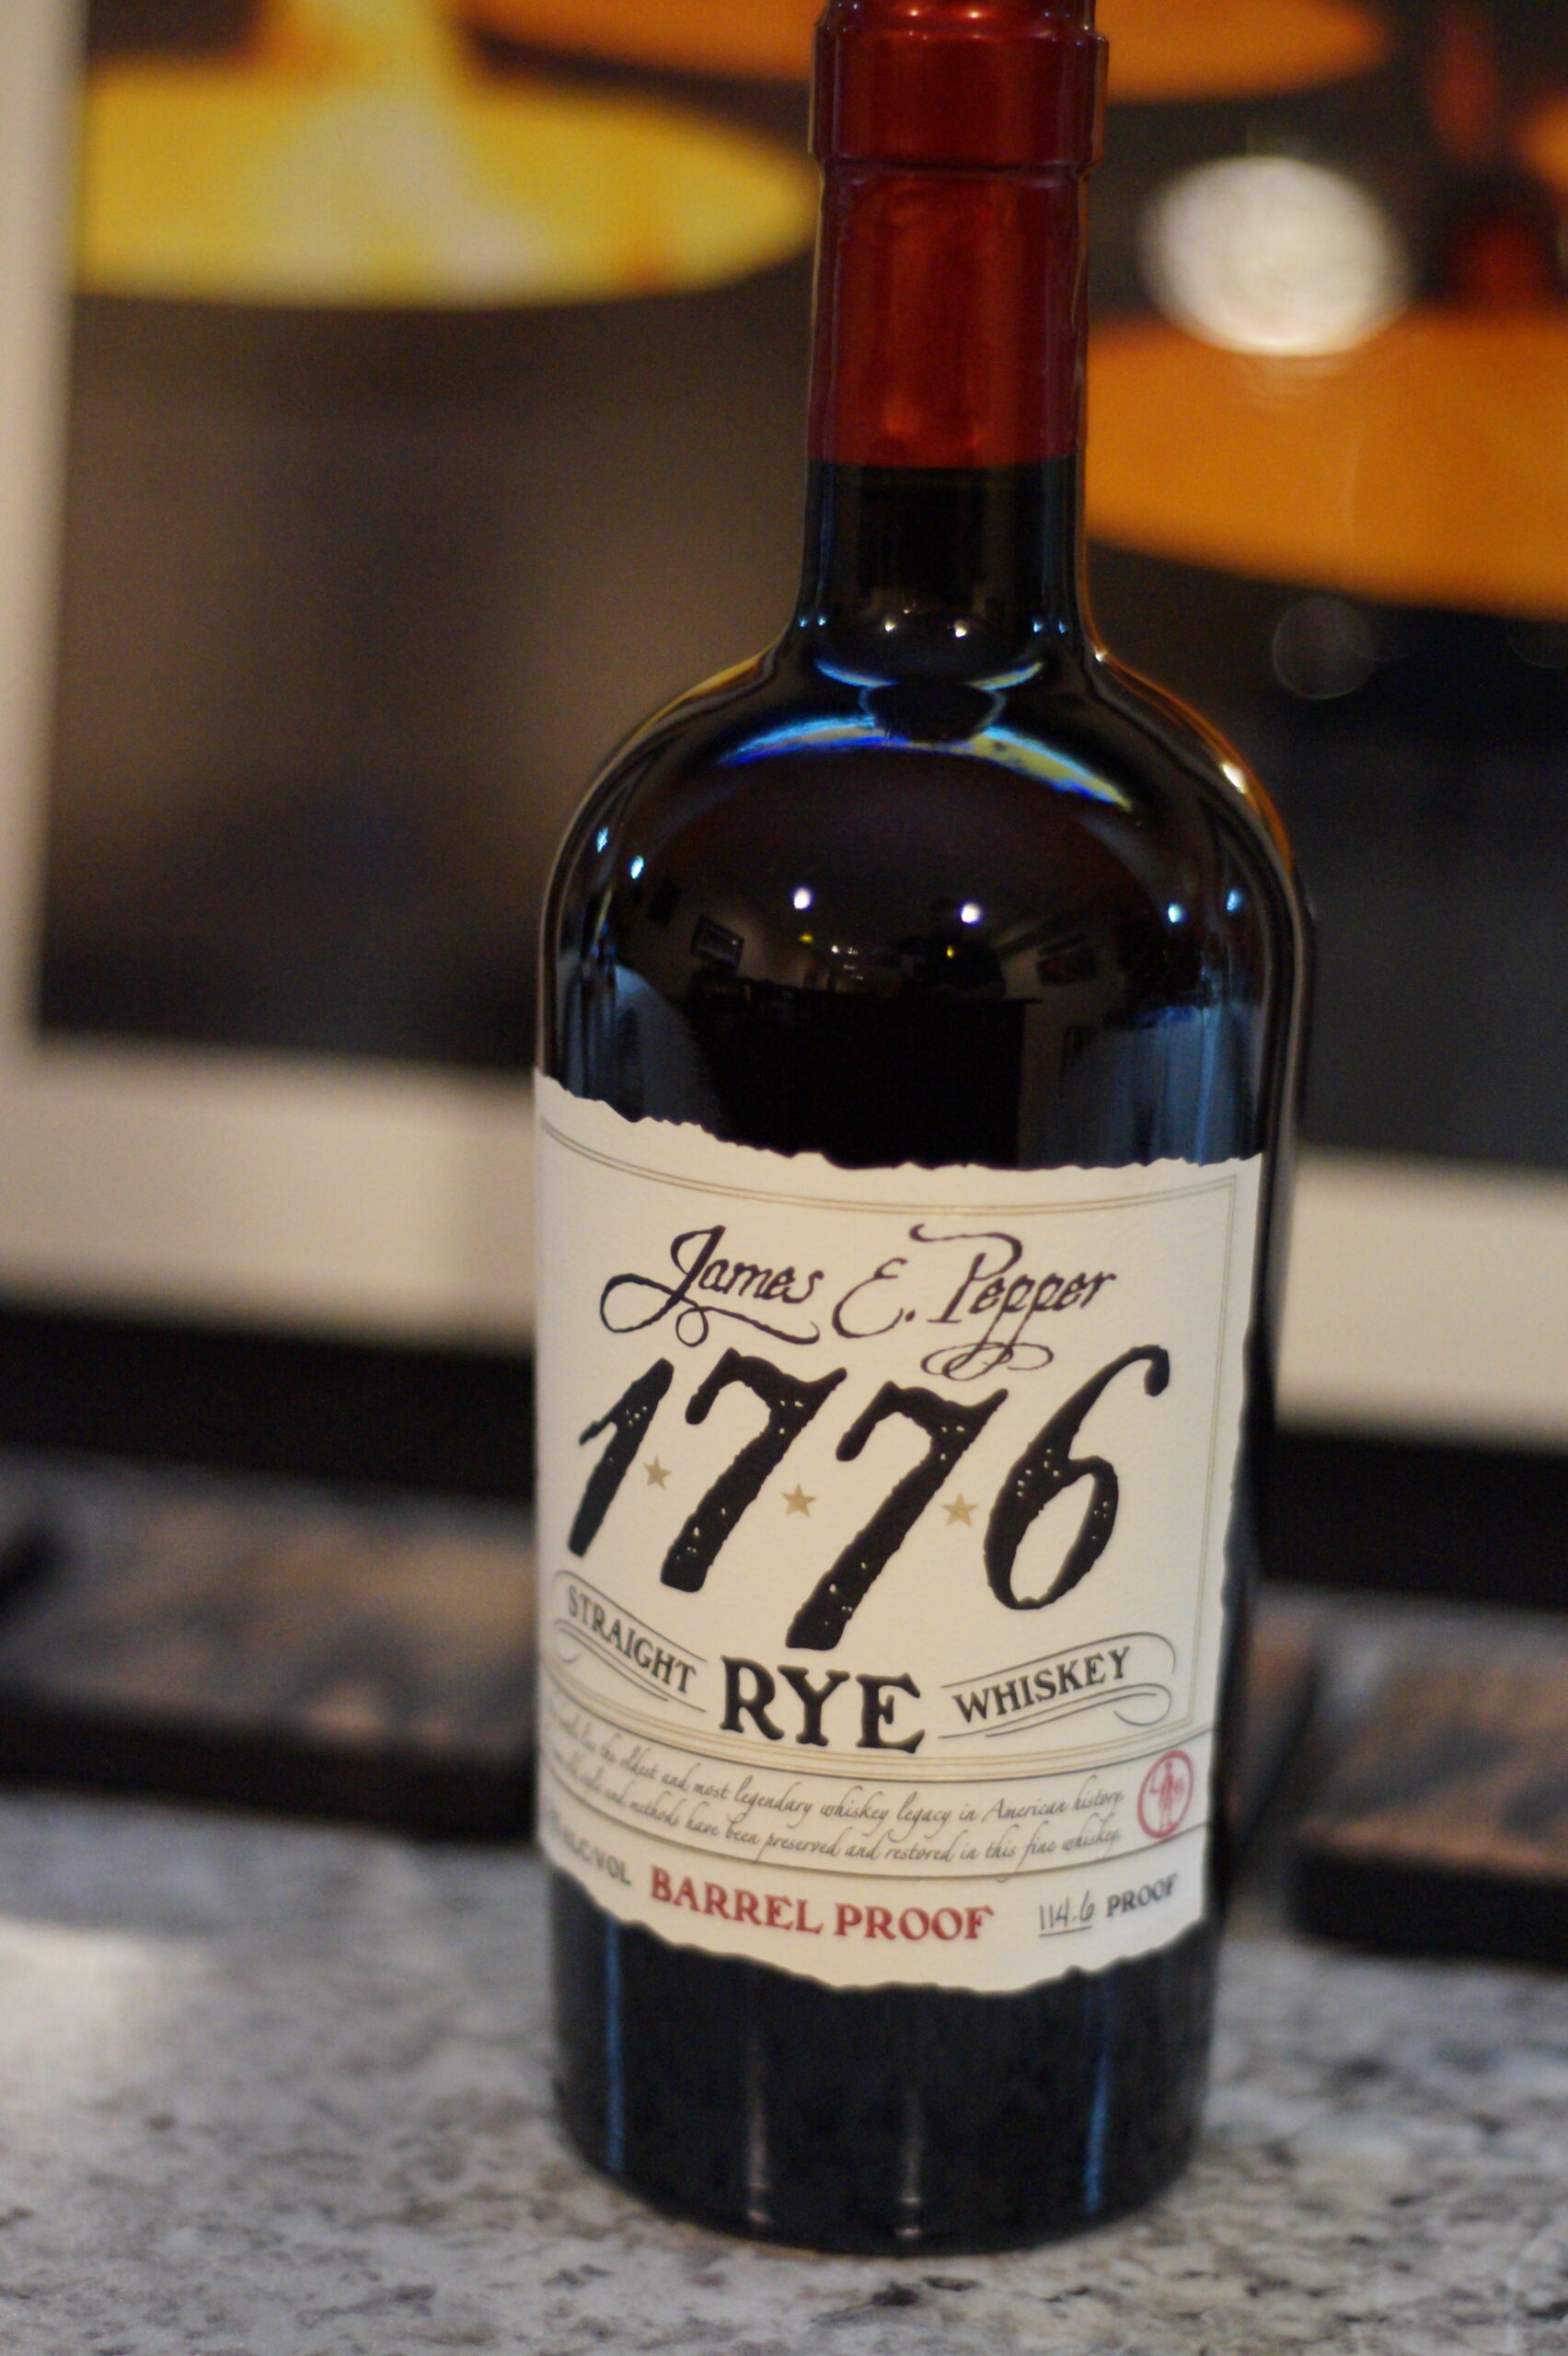 James E. Pepper Whiskey ModernThirst Proof 1776 Barrel Review – Rye